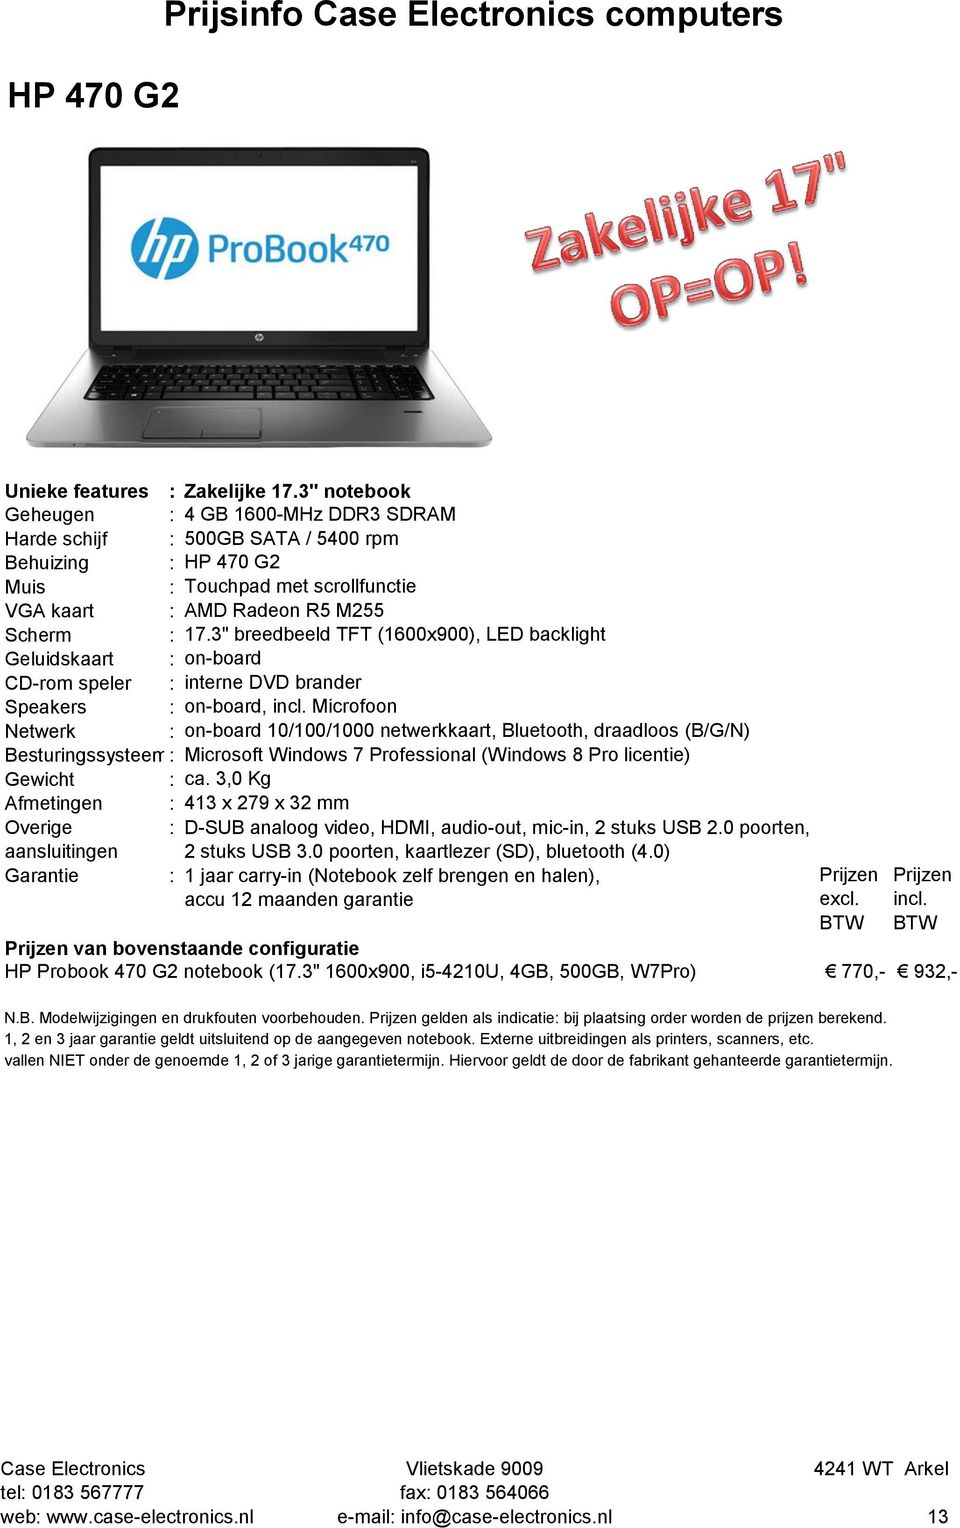 3" breedbeeld TFT (1600x900), LED backlight Speakers : on-board, Microfoon Netwerk : on-board 10/100/1000 netwerkkaart, Bluetooth, draadloos (B/G/N) Besturingssysteem: Microsoft Windows 7